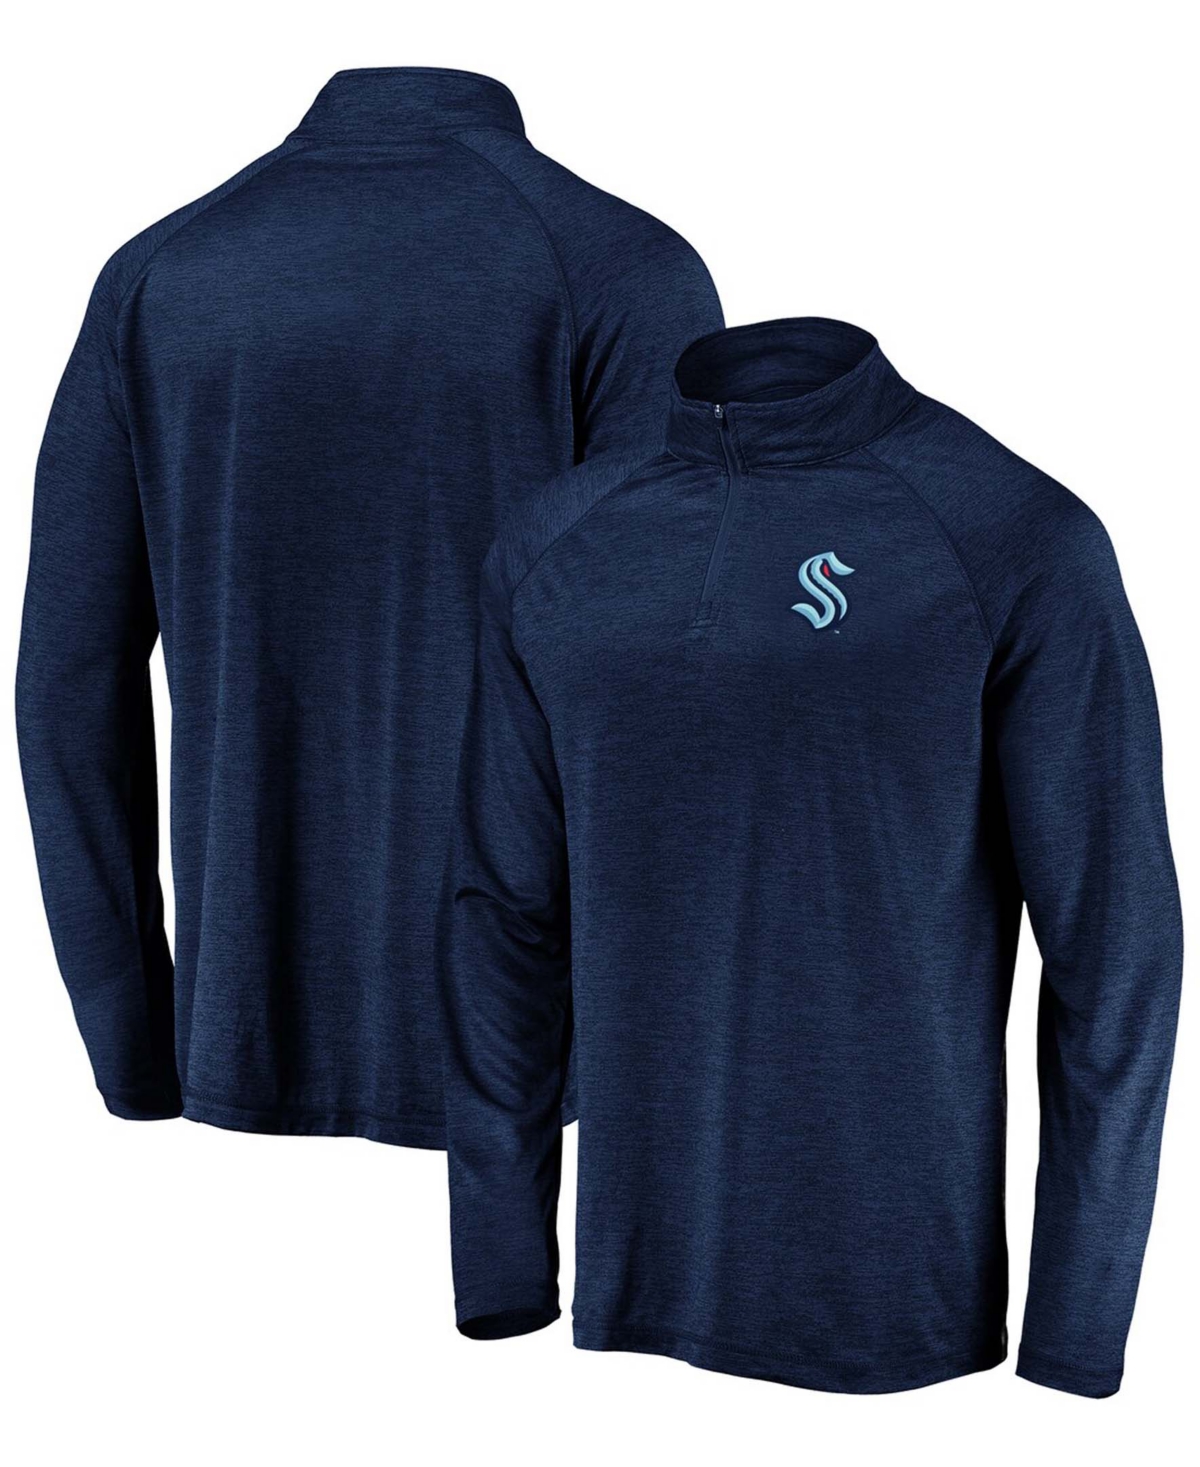 Authentic Nhl Apparel Fanatics Branded Men's Navy Seattle Kraken Primary Logo Quarter-zip Pullover Fleece Jacket